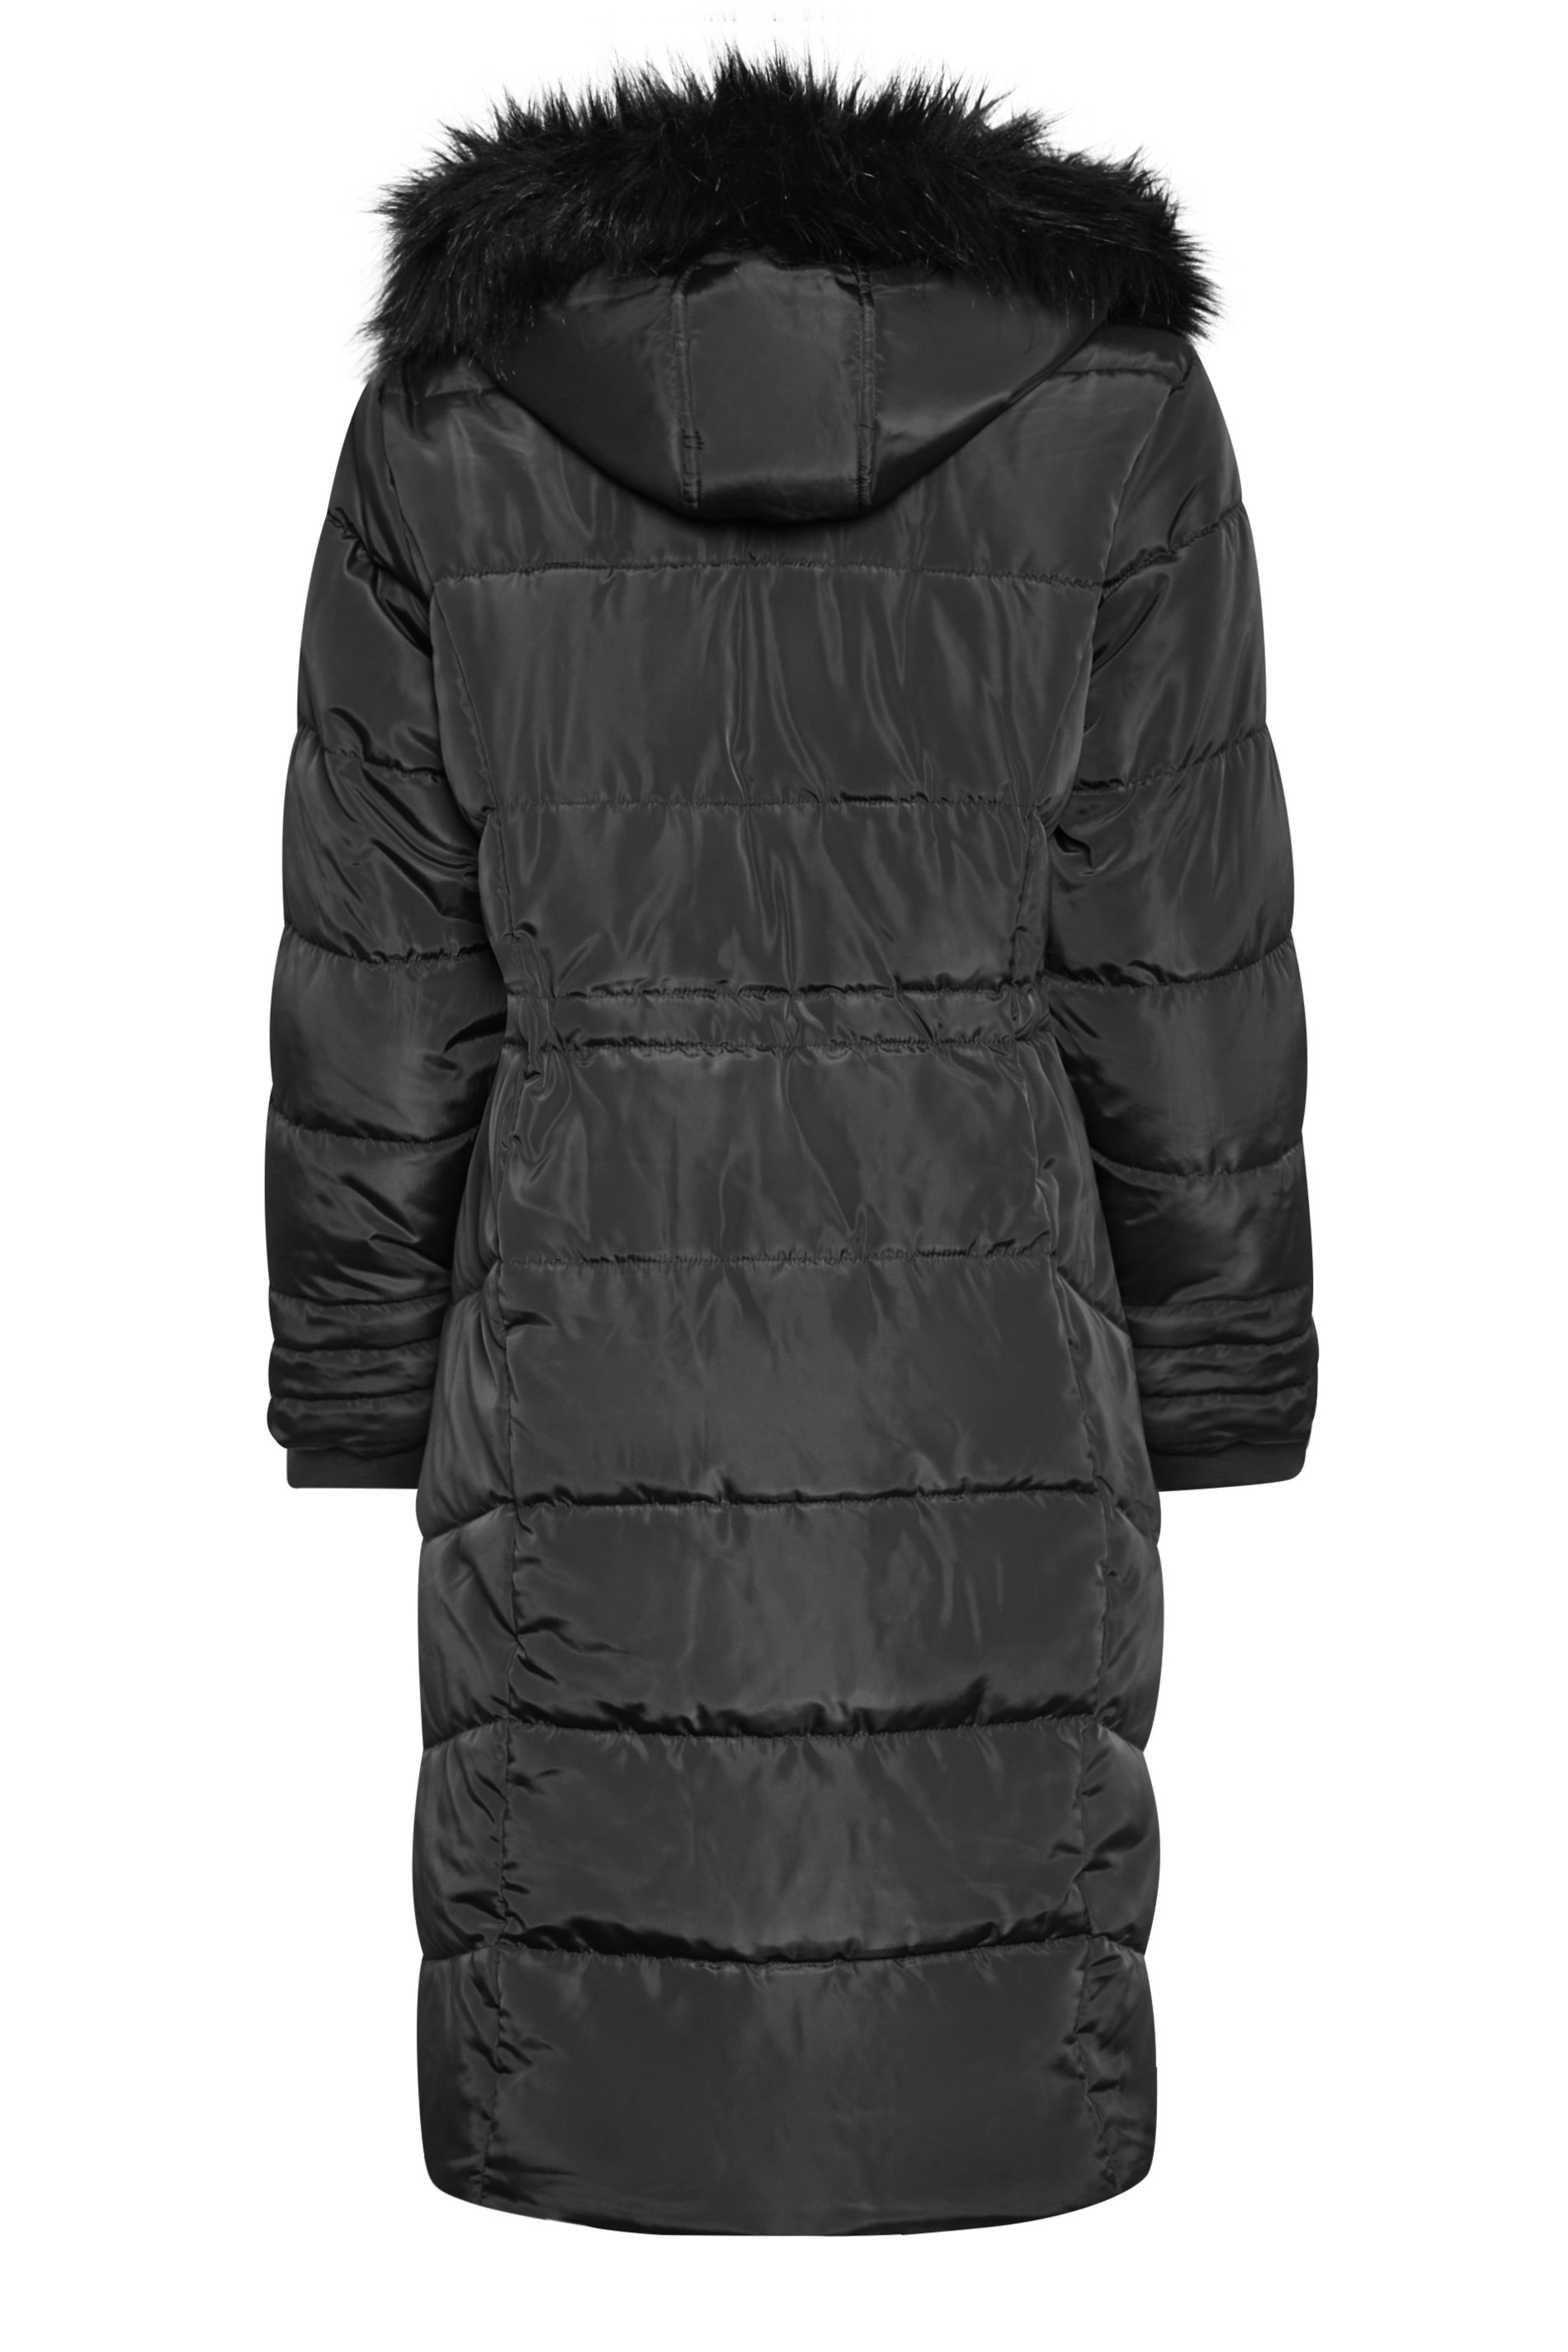 PixieGirl Black Midi Padded Coat | PixieGirl